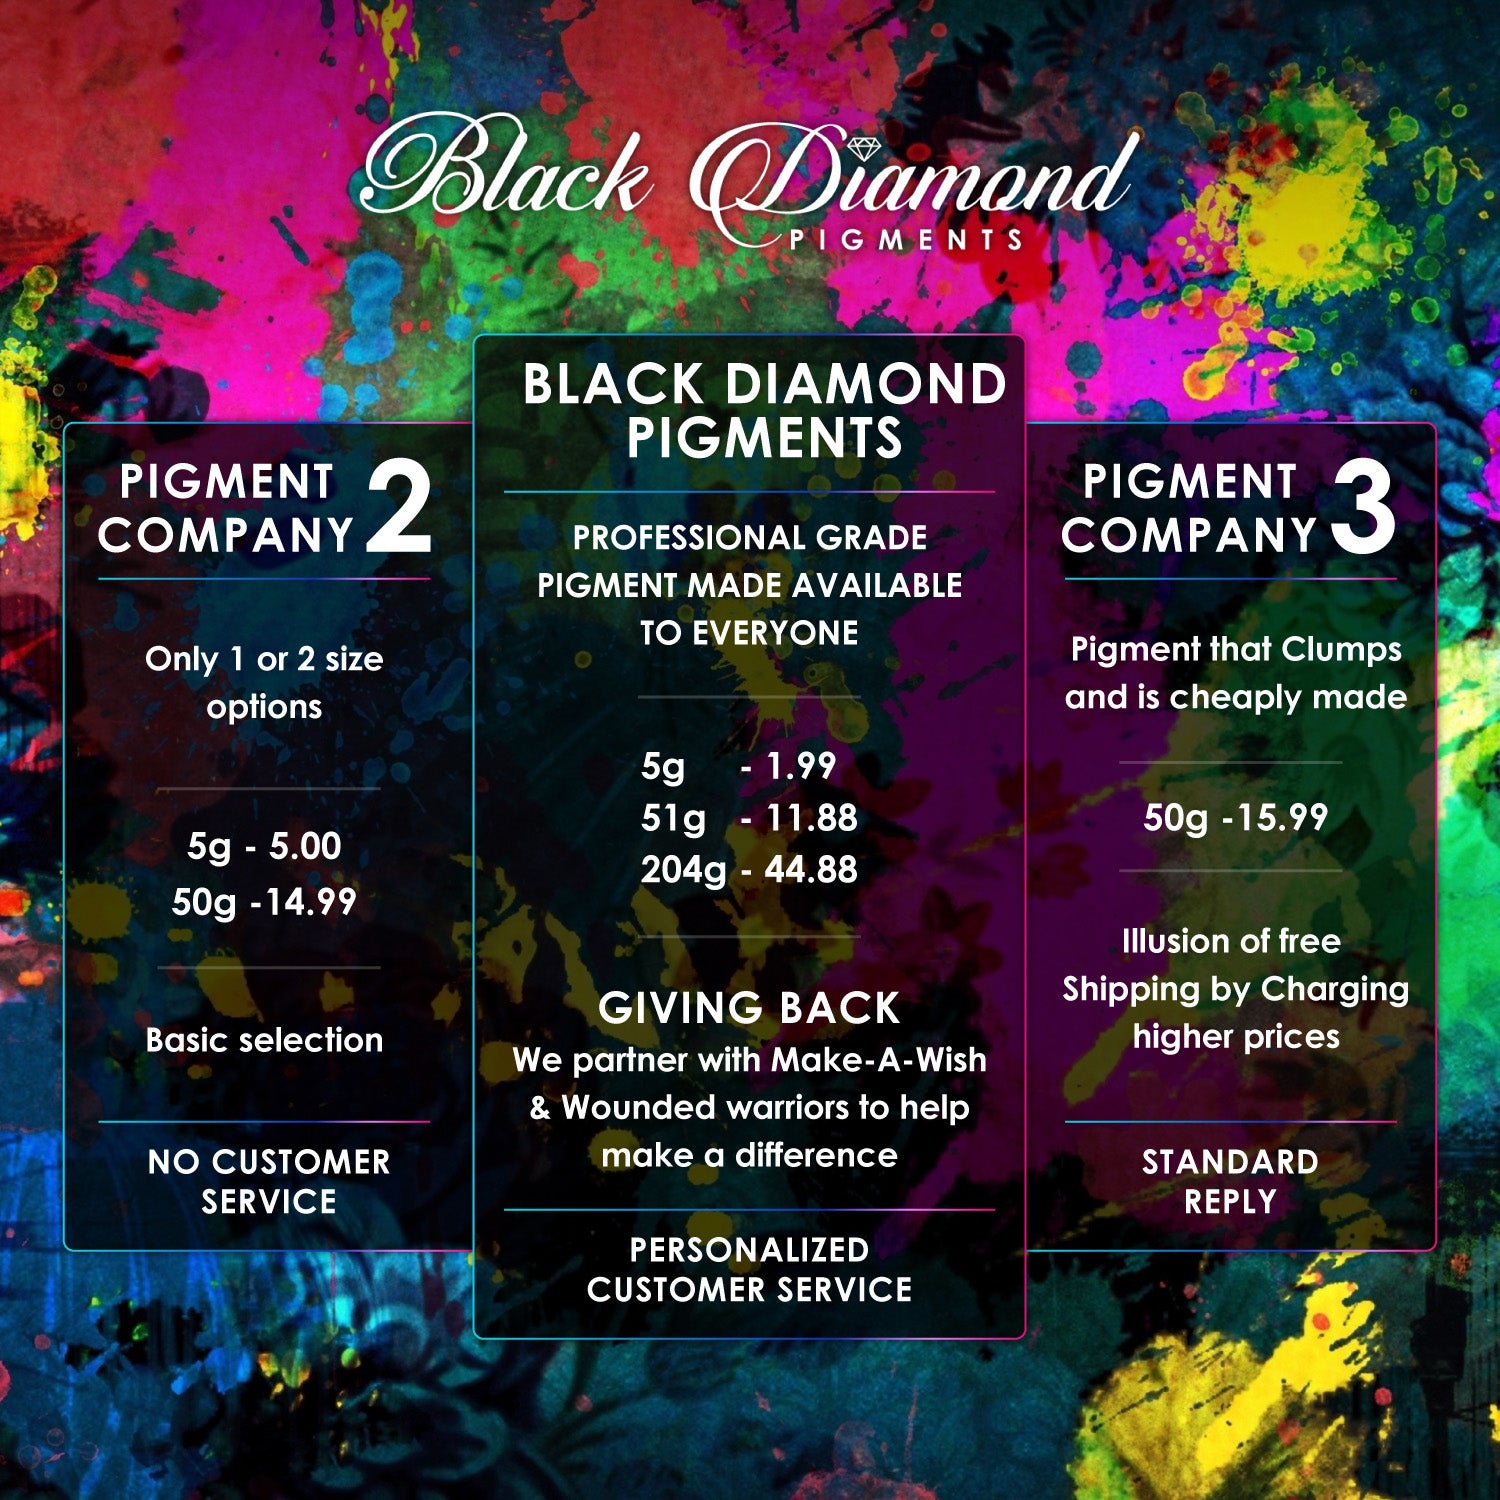 "GOLDEN PURPLE RAIN" Black Diamond Pigments